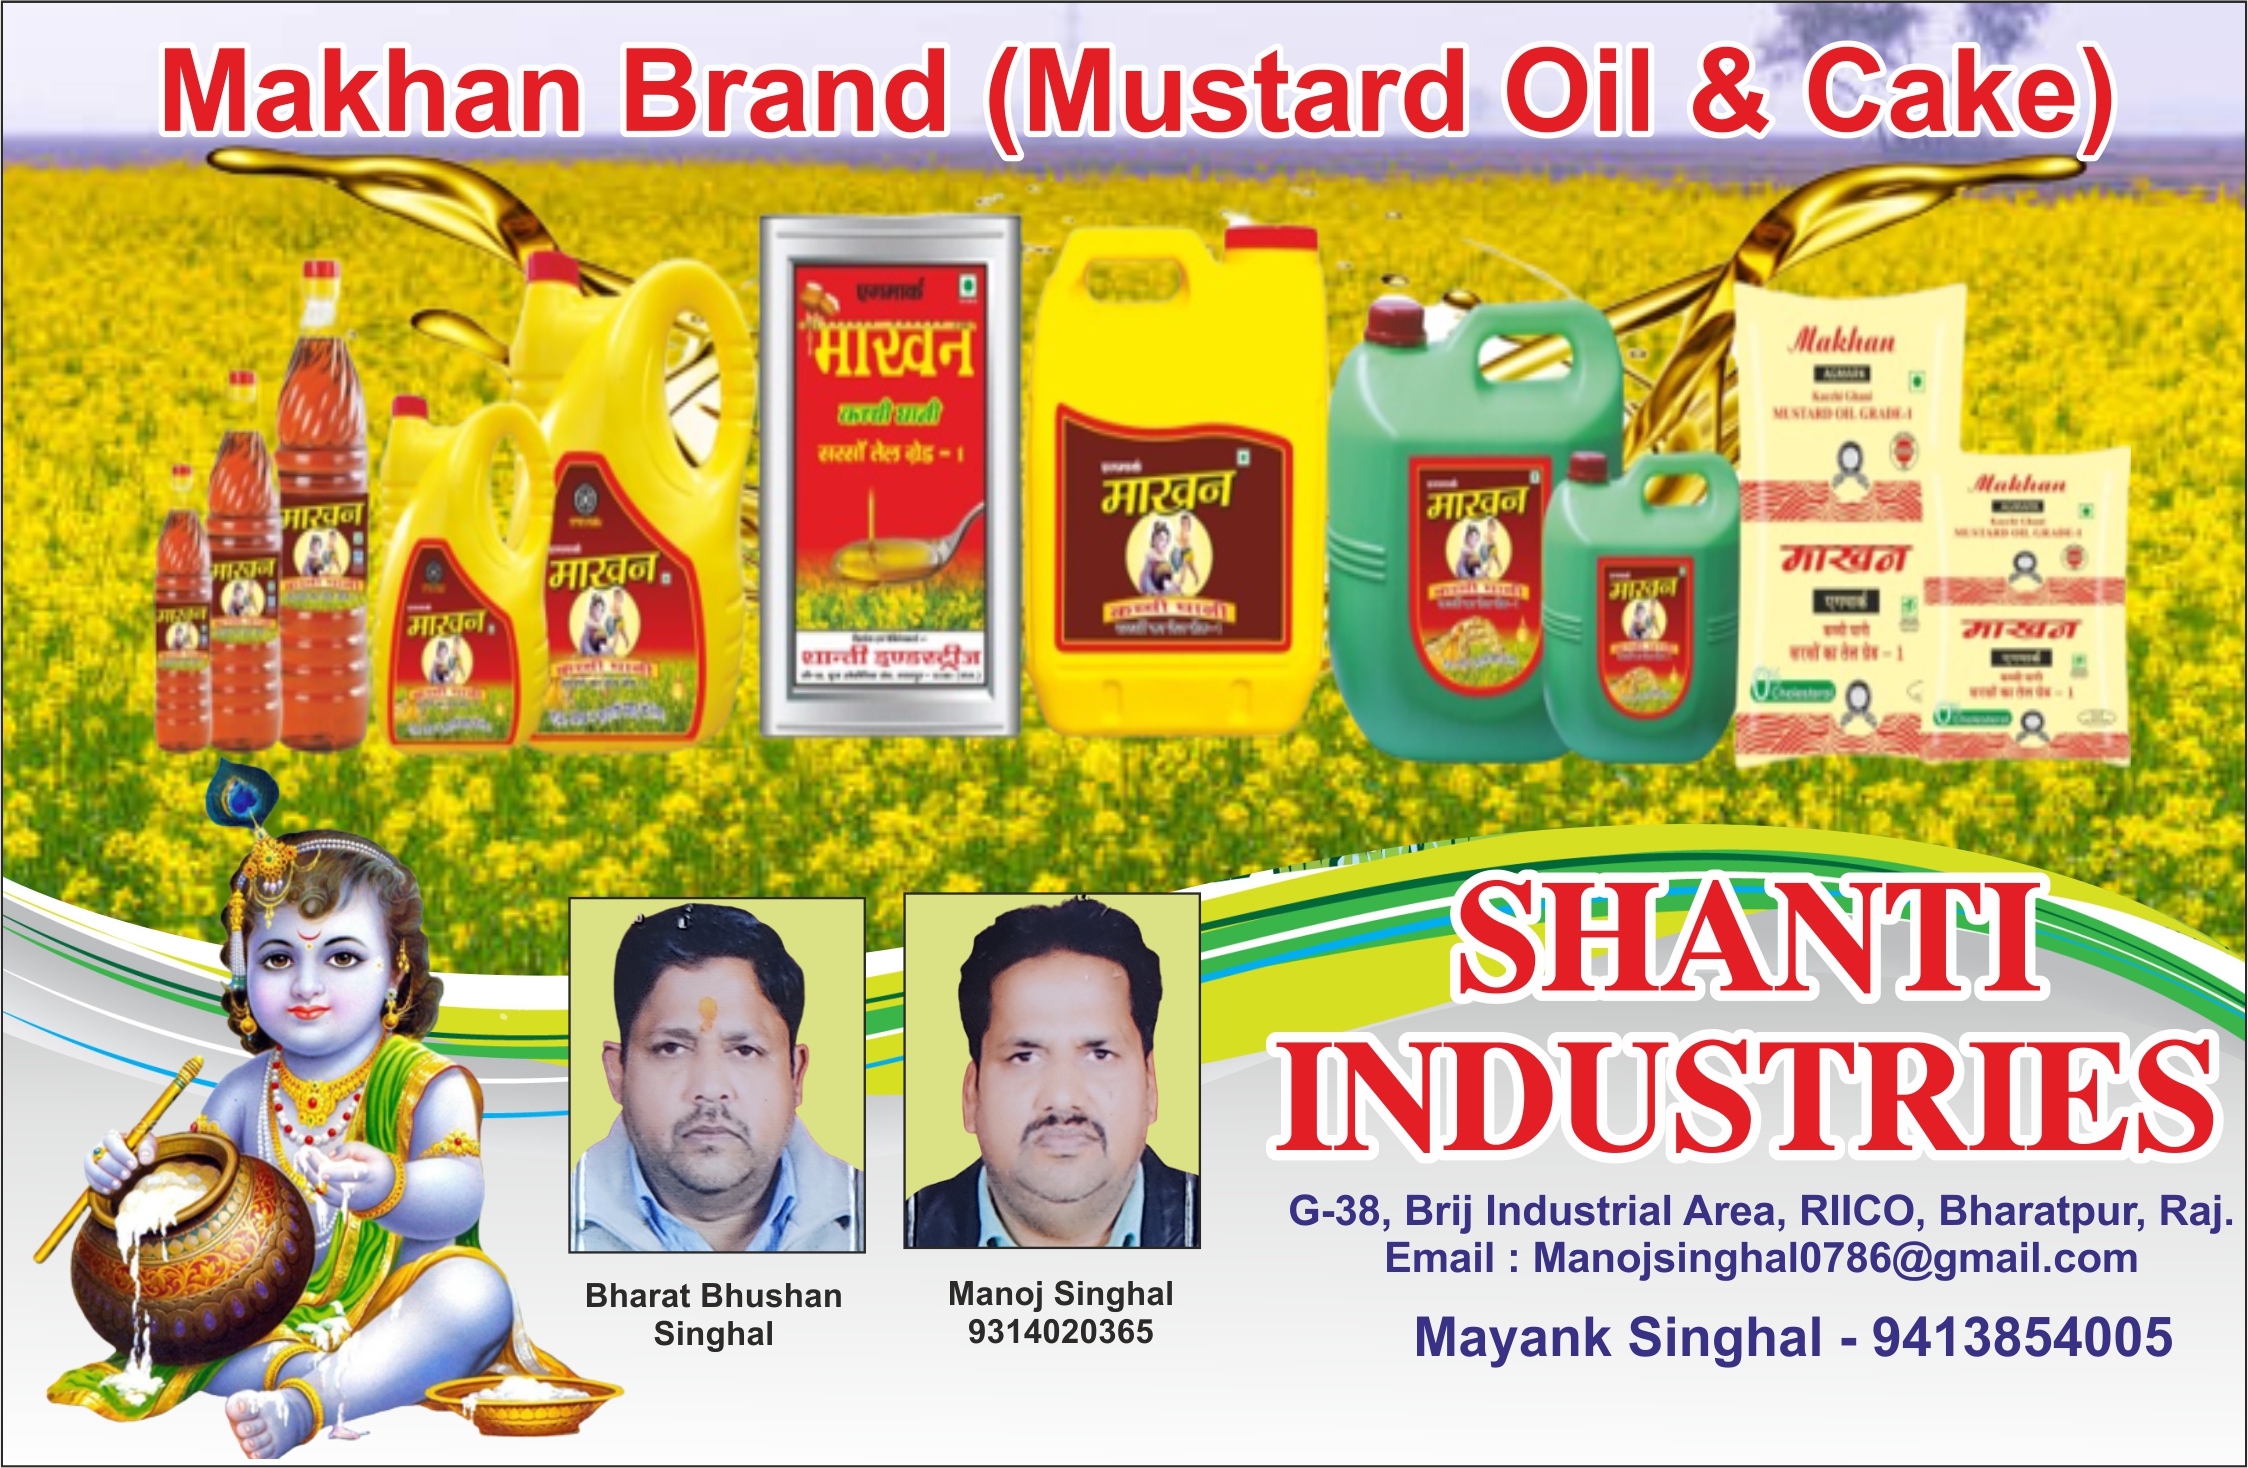 Shanti Industries